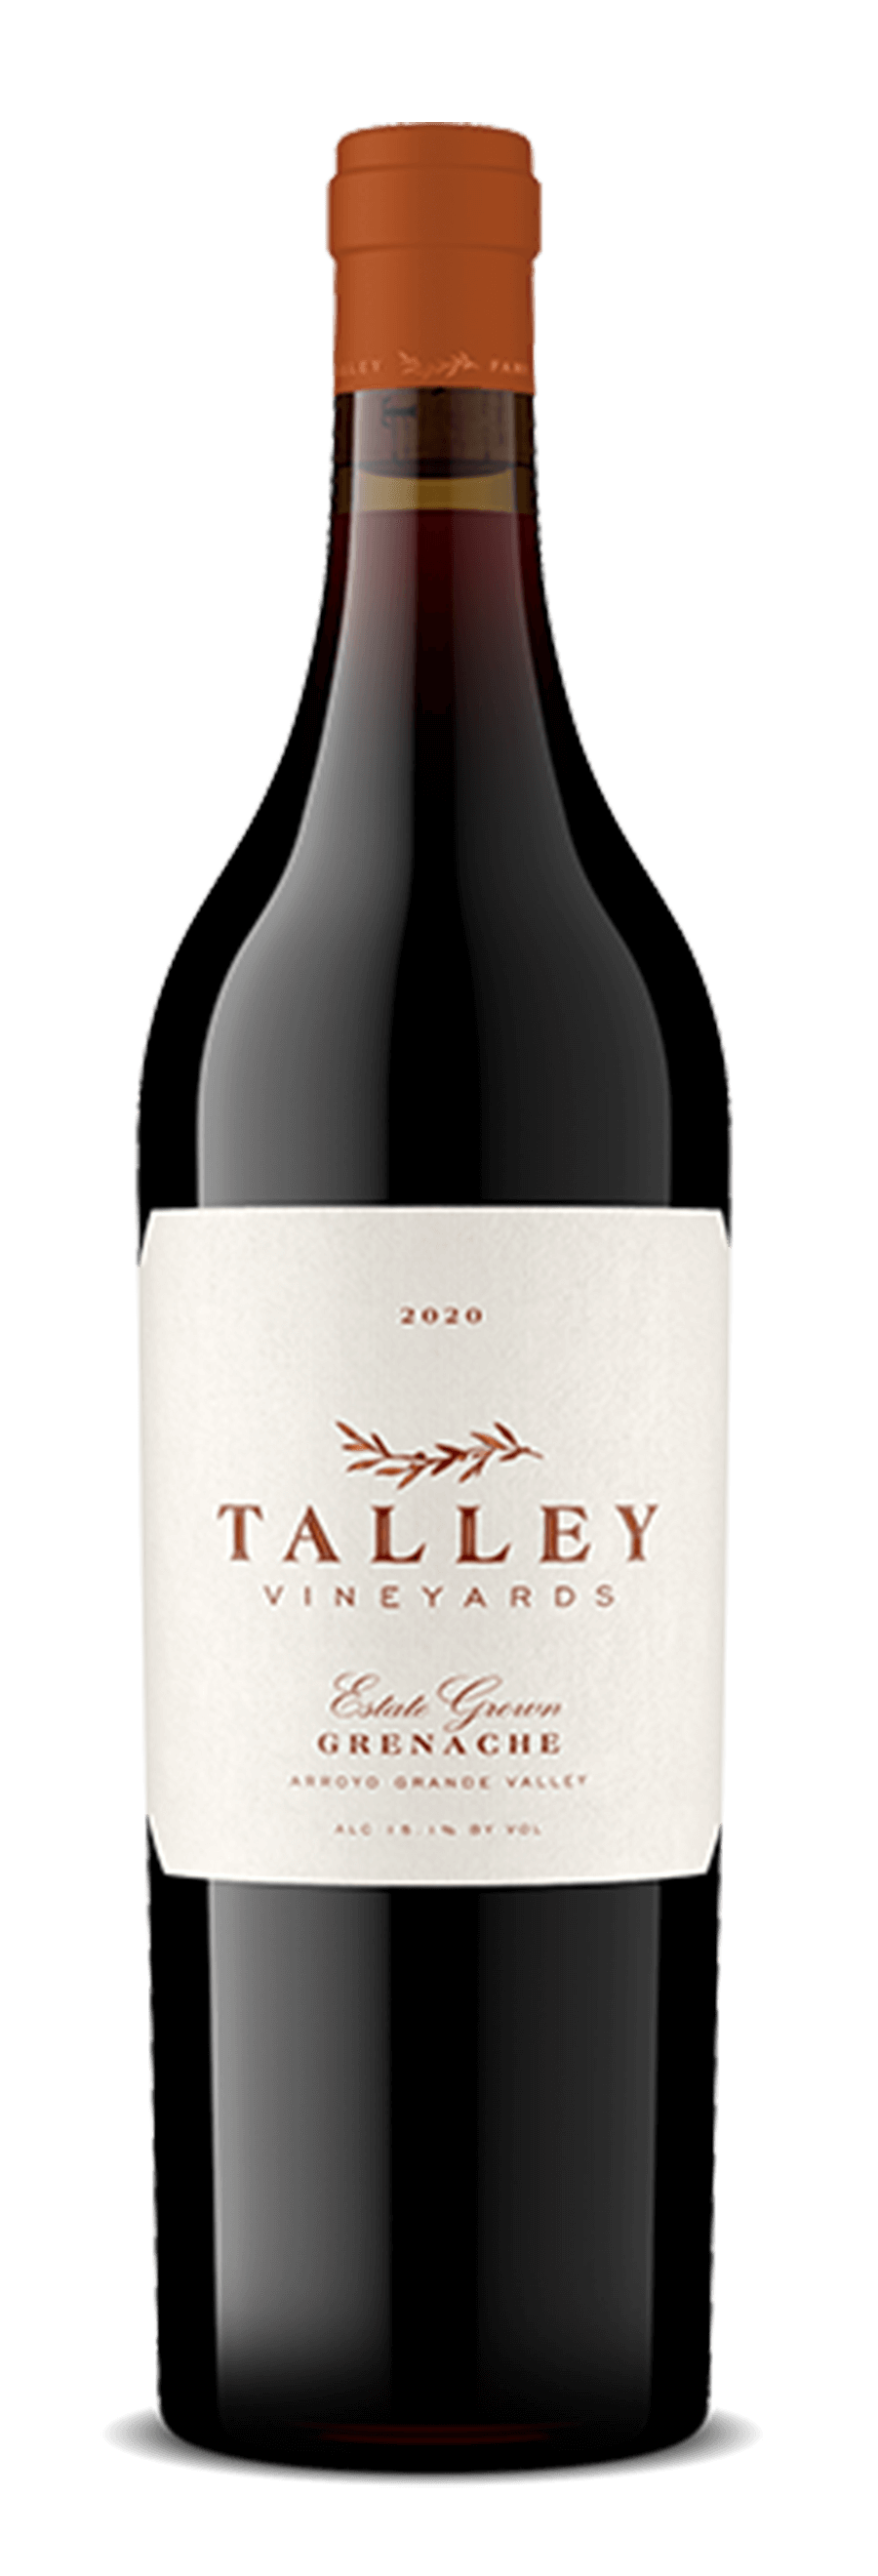 A bottle of 2020 Grenache by Talley Vineyards, San Luis Obispo Coast